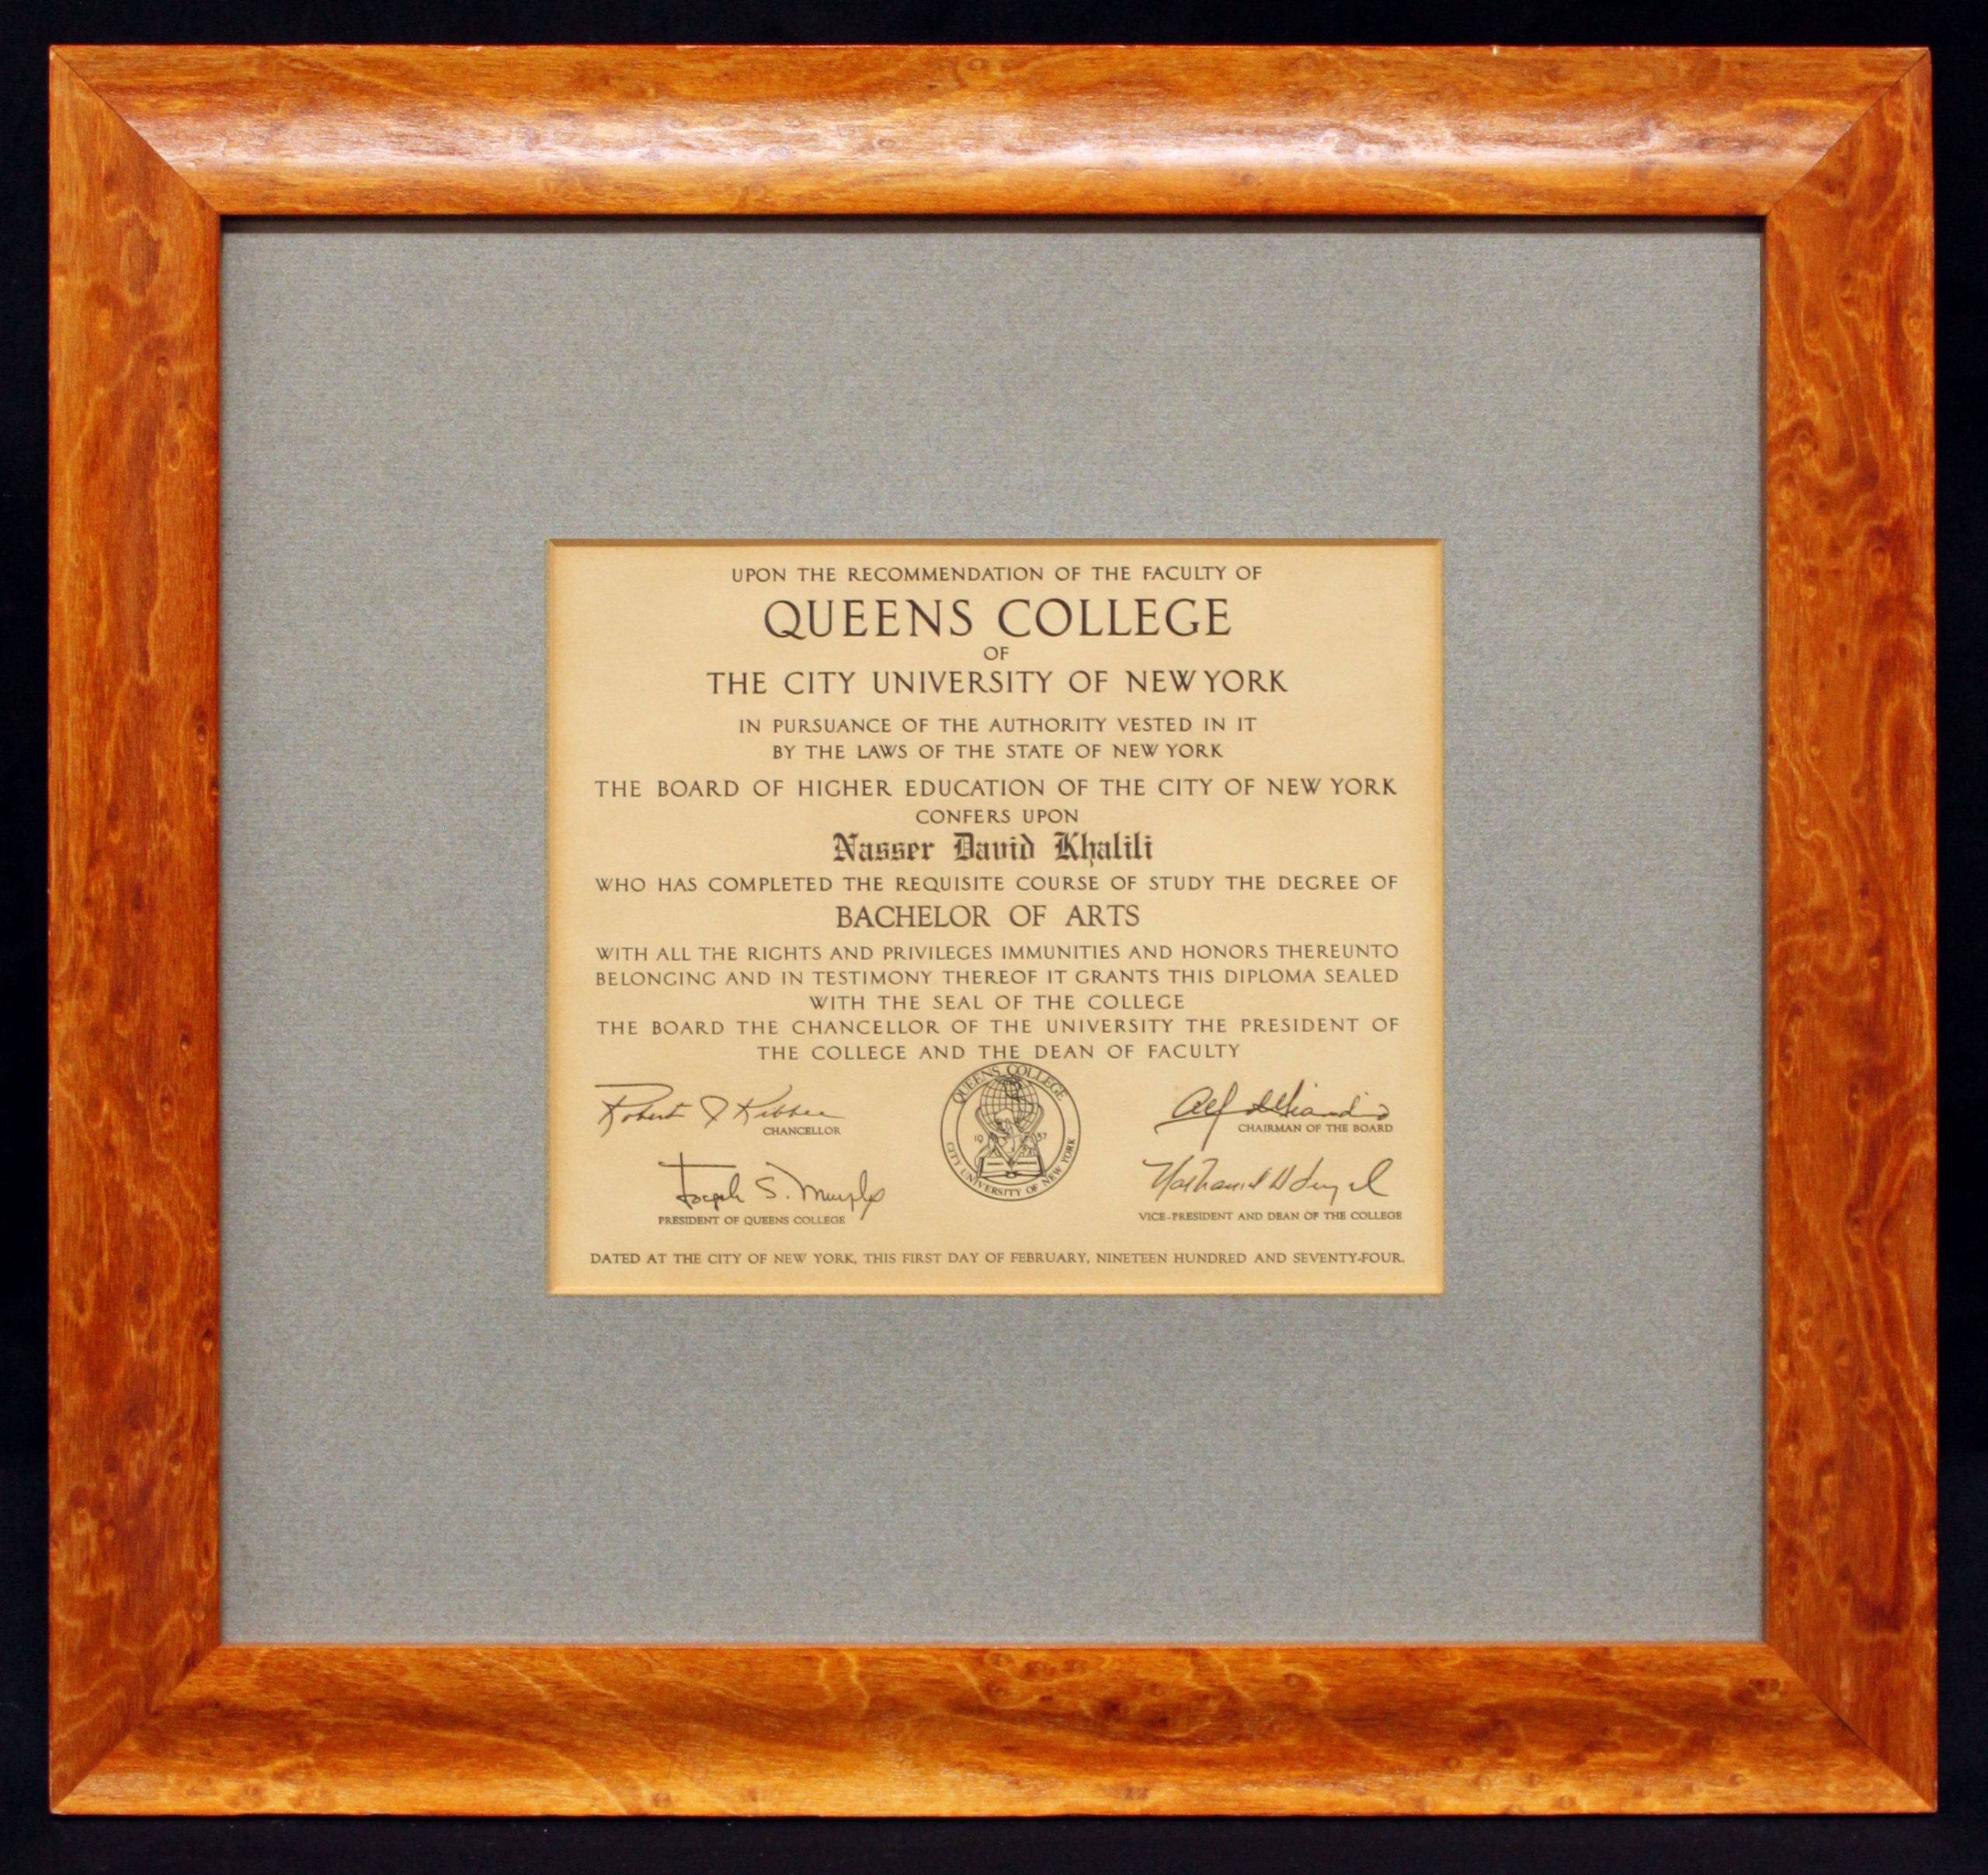 Bachelor of Arts, Queens college – 1974